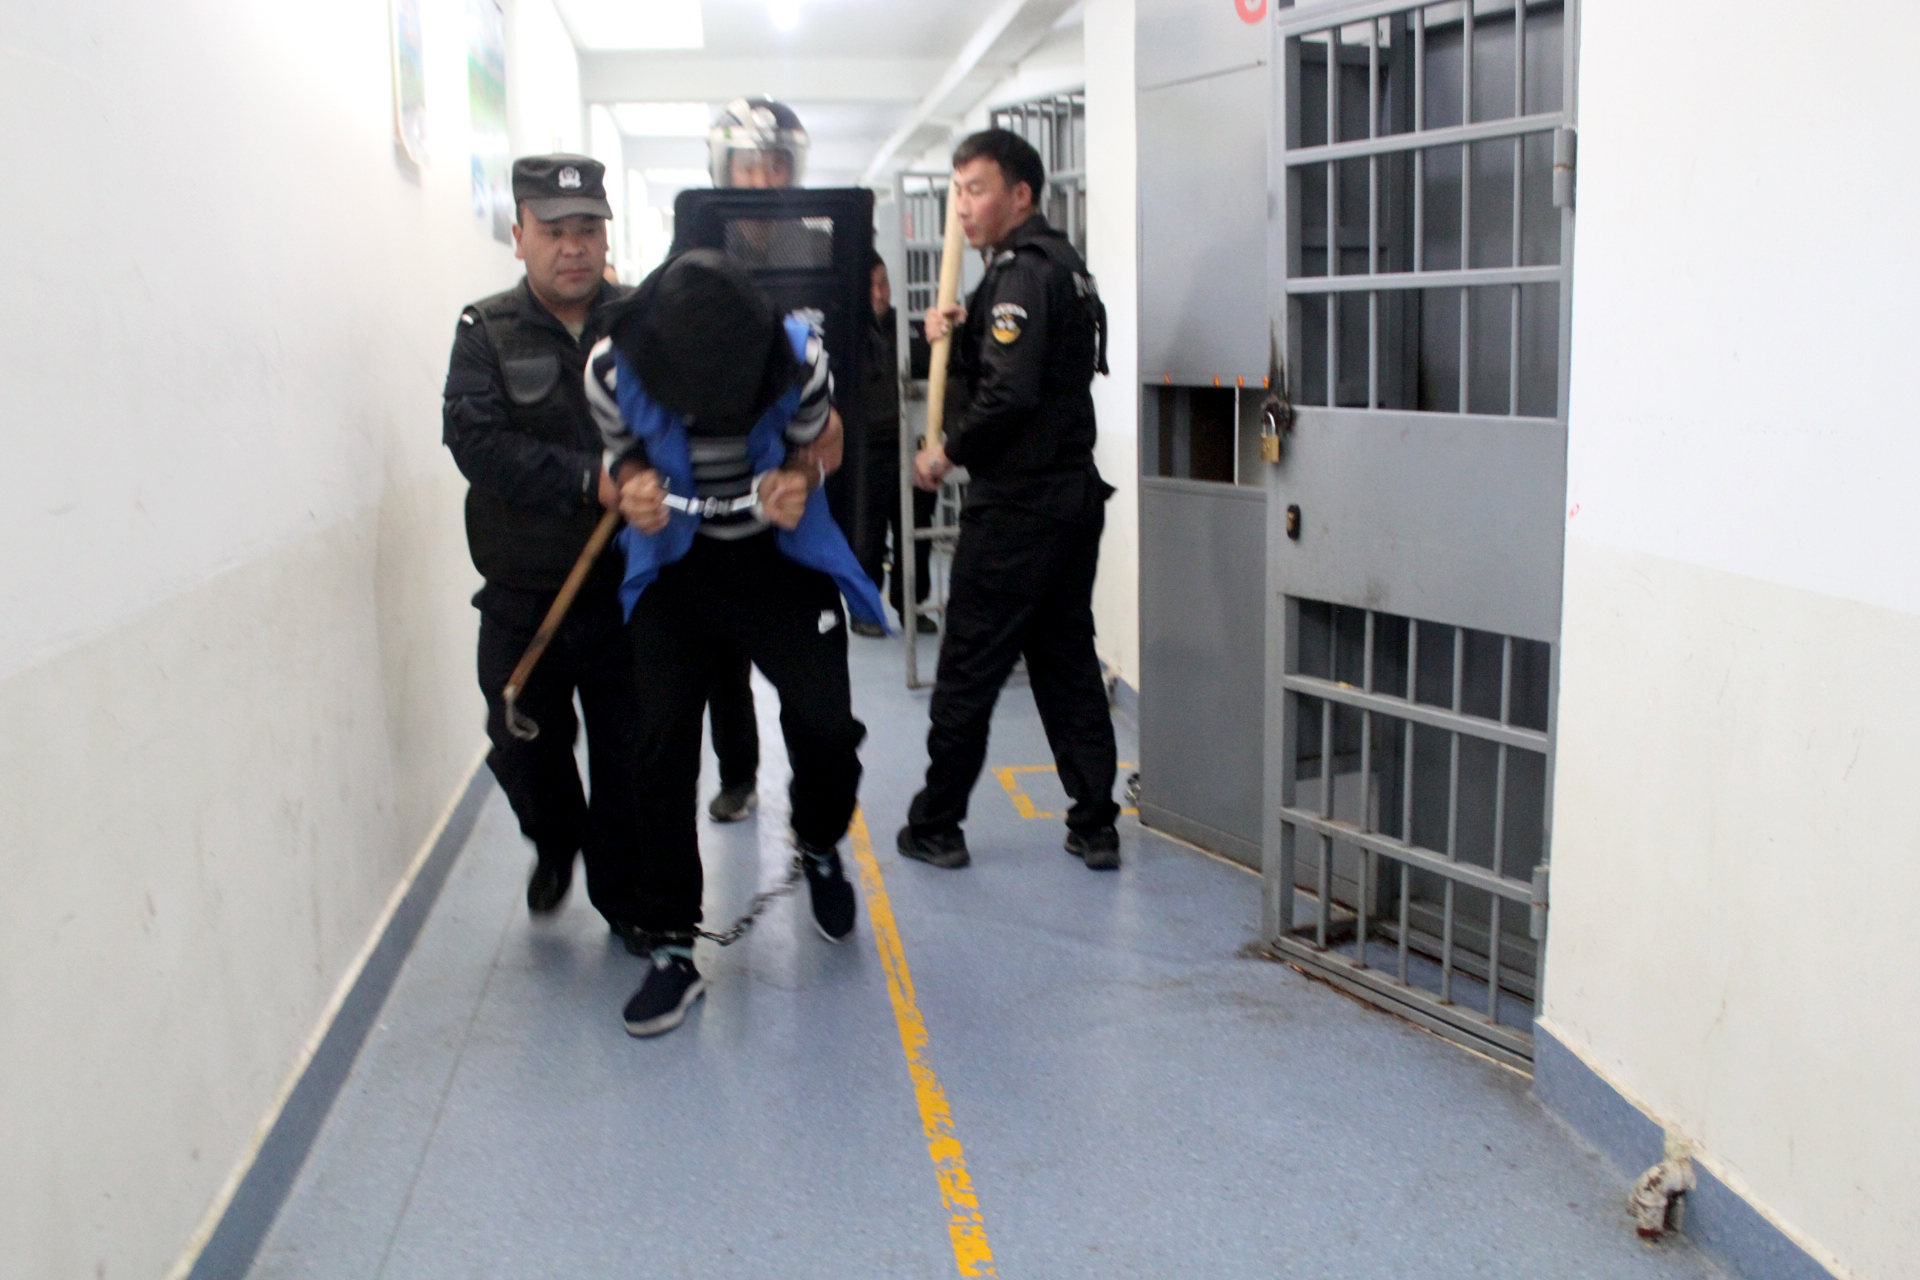 Miles de documentos secretos ponen rostro a la represión china en Xinjiang: régimen carcelario, niños reclusos y “disparar a matar”